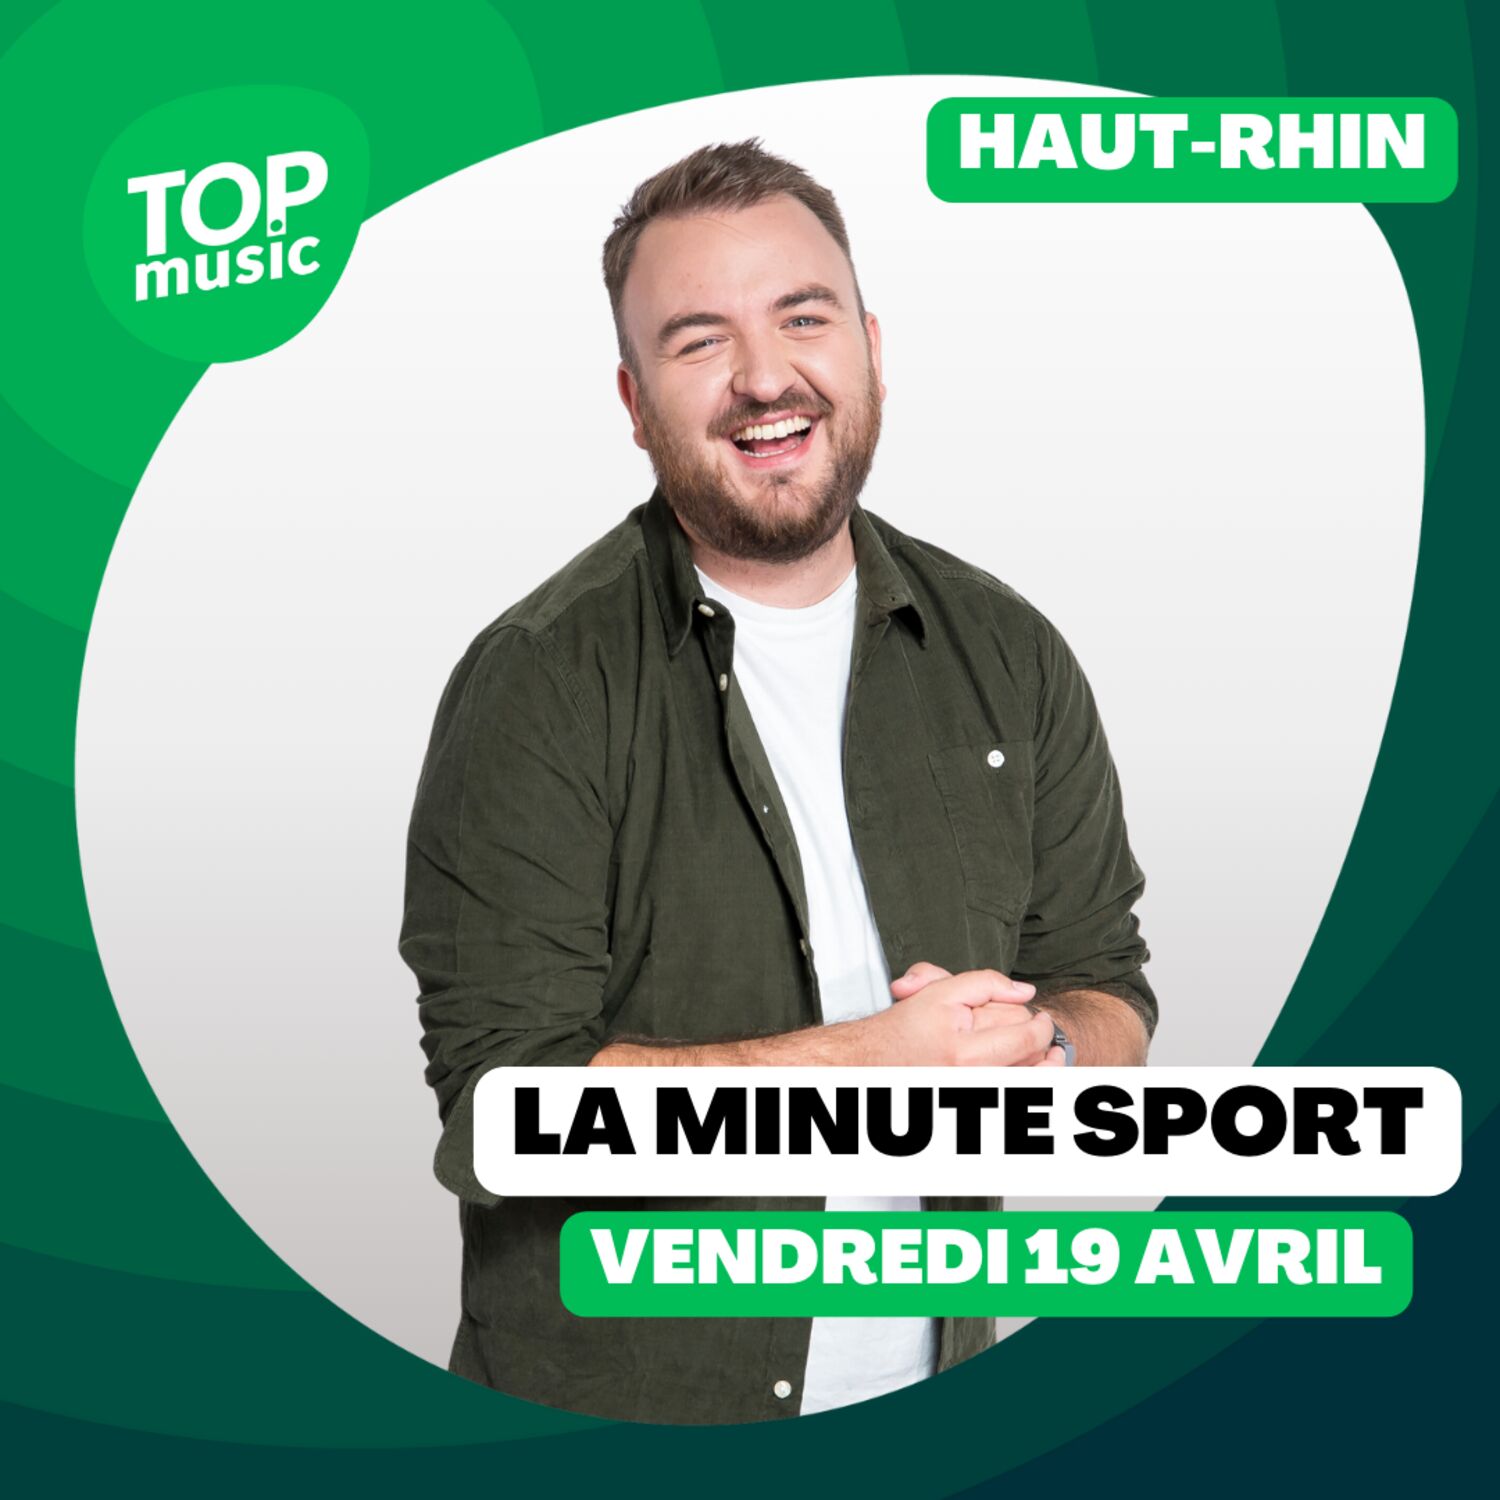 La Minute sport du Haut-Rhin - vendredi 19 avril